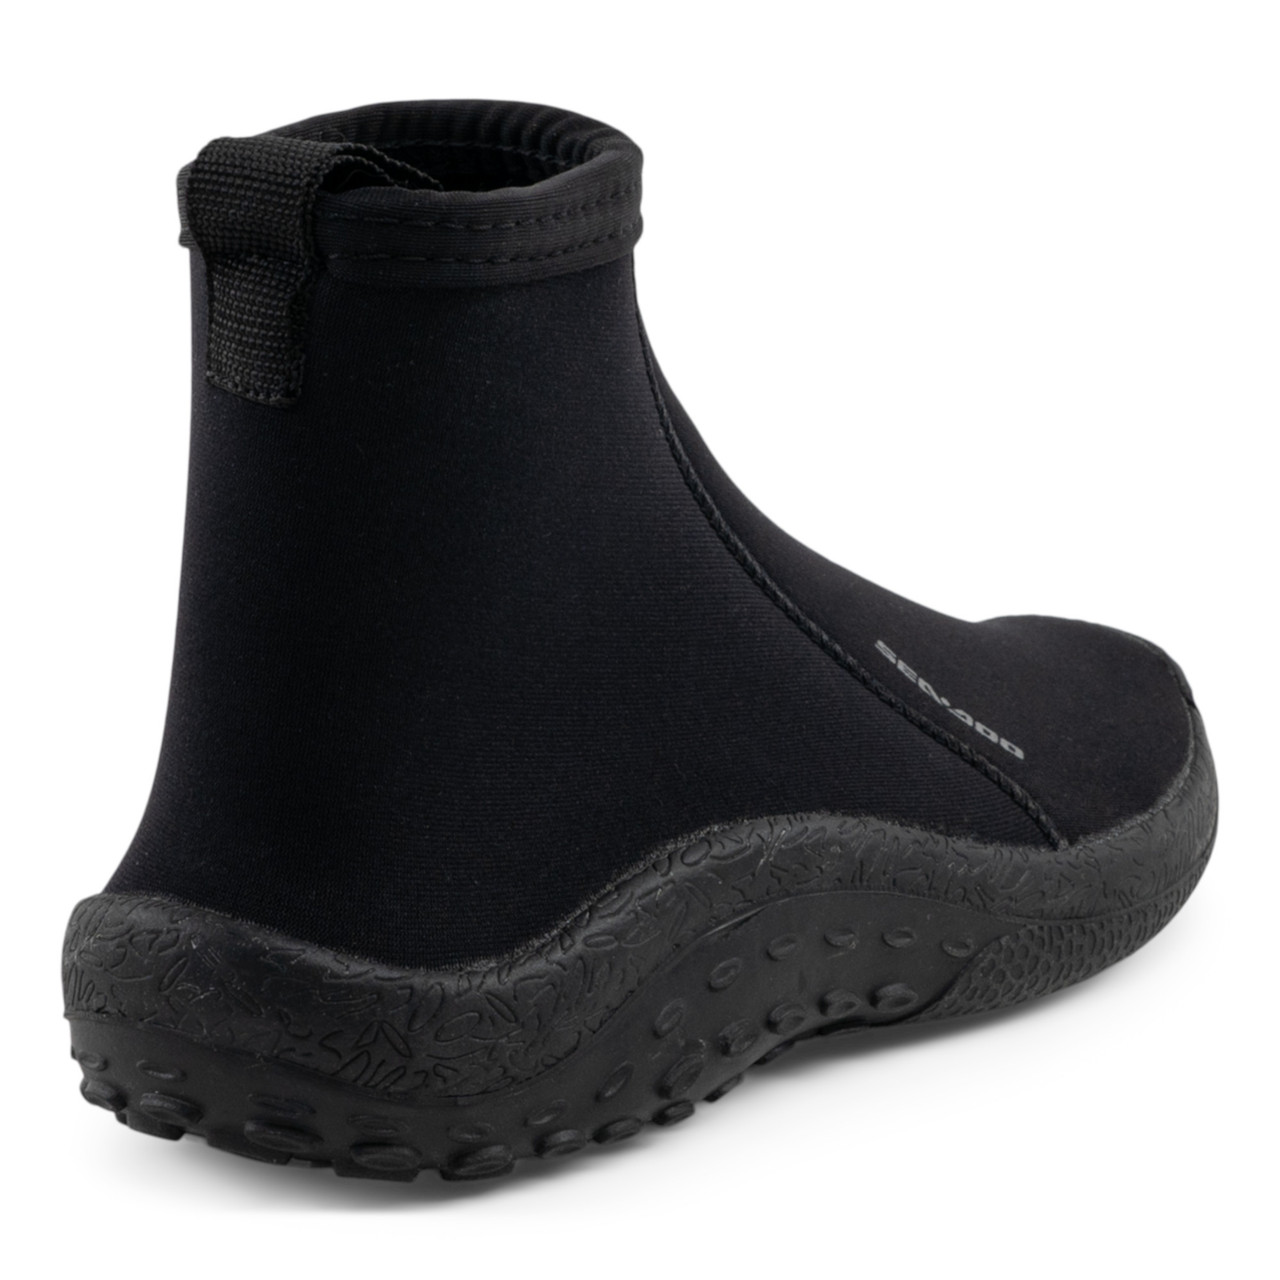 Sea-Doo New OEM, Unisex Ultra-Durable Double-glued Neoprene Shoes, 4442612890